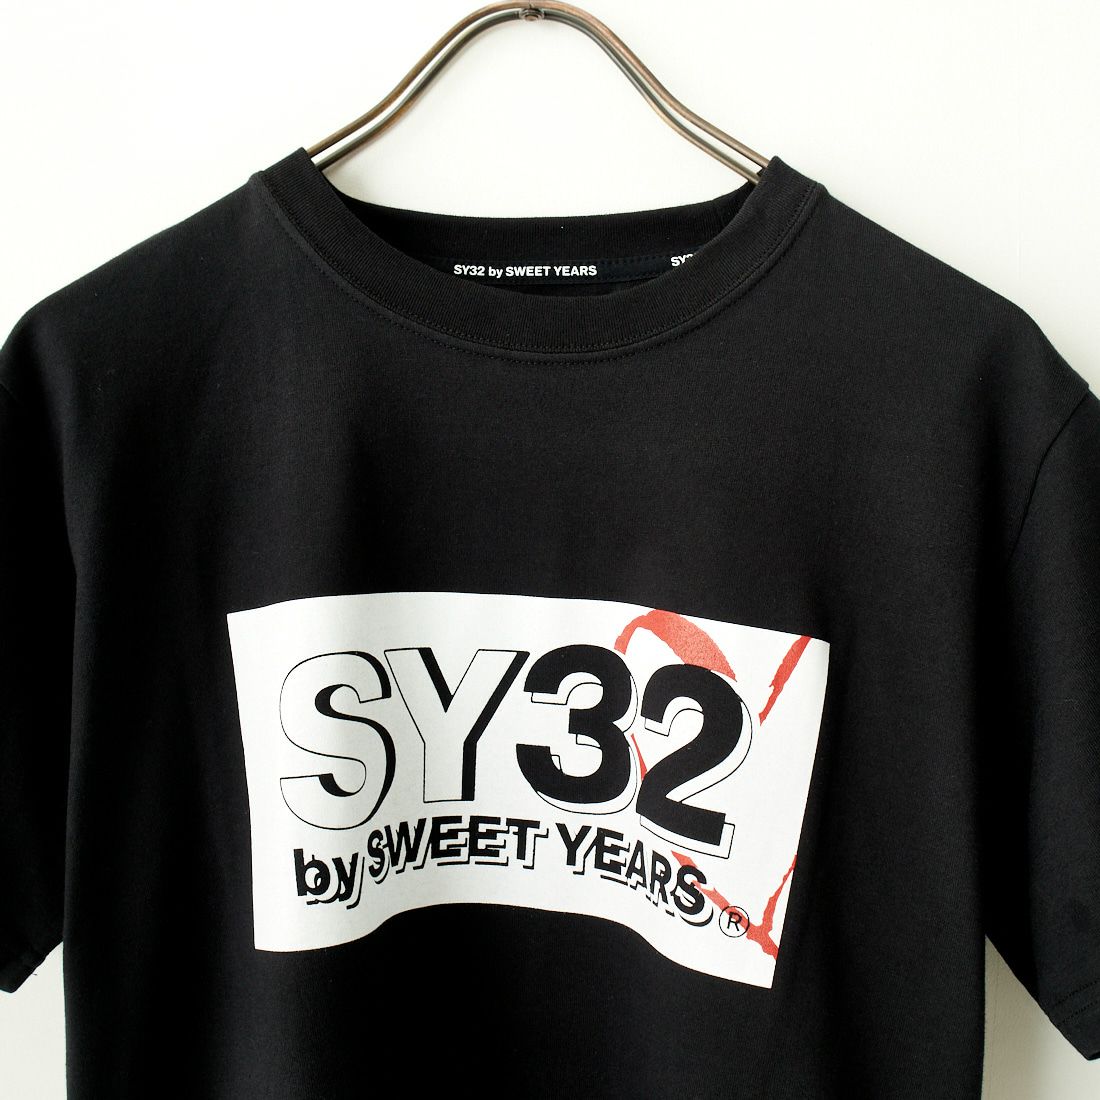 SY32 [エスワイサーティトゥ] ニューボックスロゴTシャツ [14153J] BLACK/WHIT